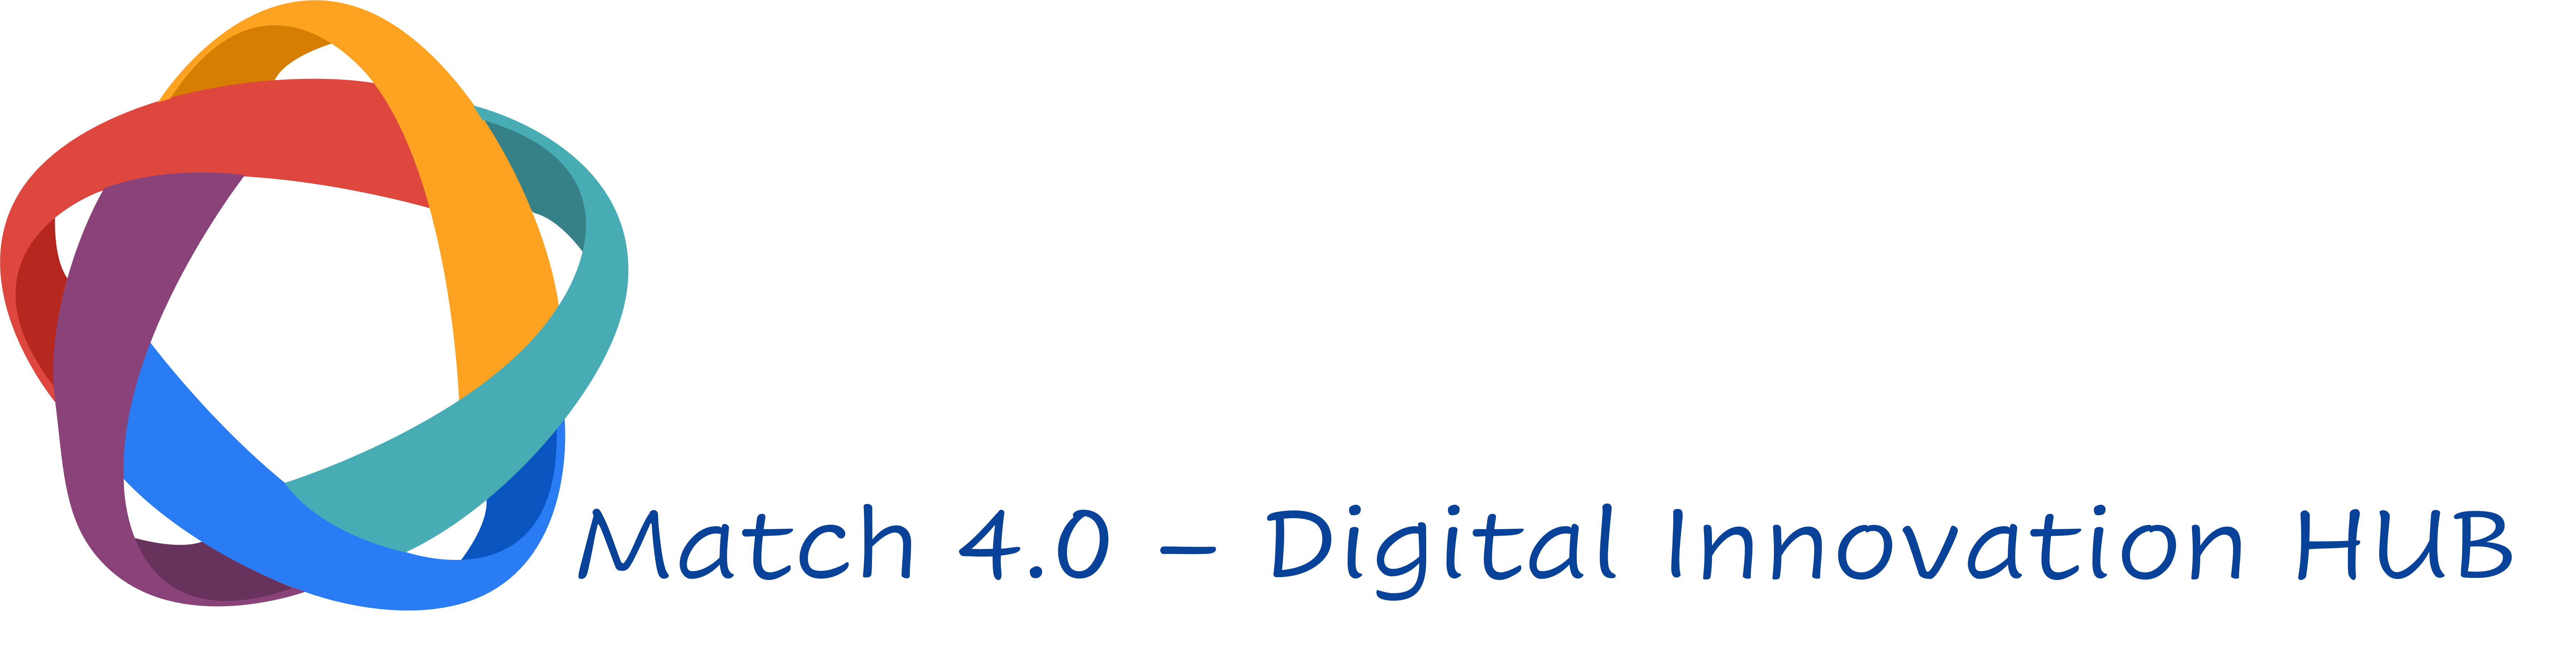 MATCH4.0 Abruzzo Digital Innovation Hub